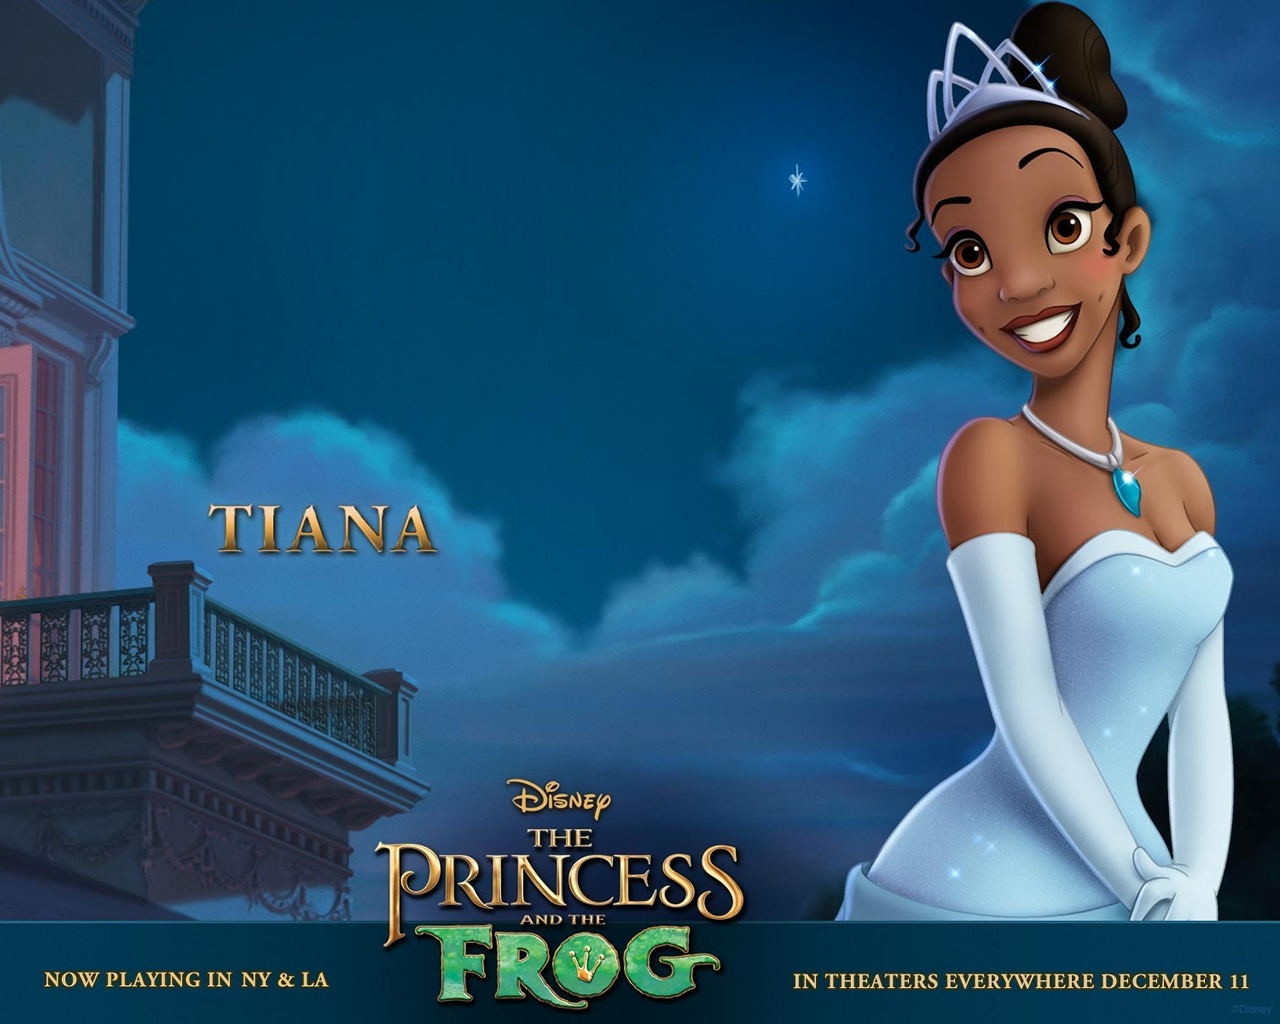 The Princess and the Frog Tiana desktop wallpaper 1280 x 1024 1280x1024